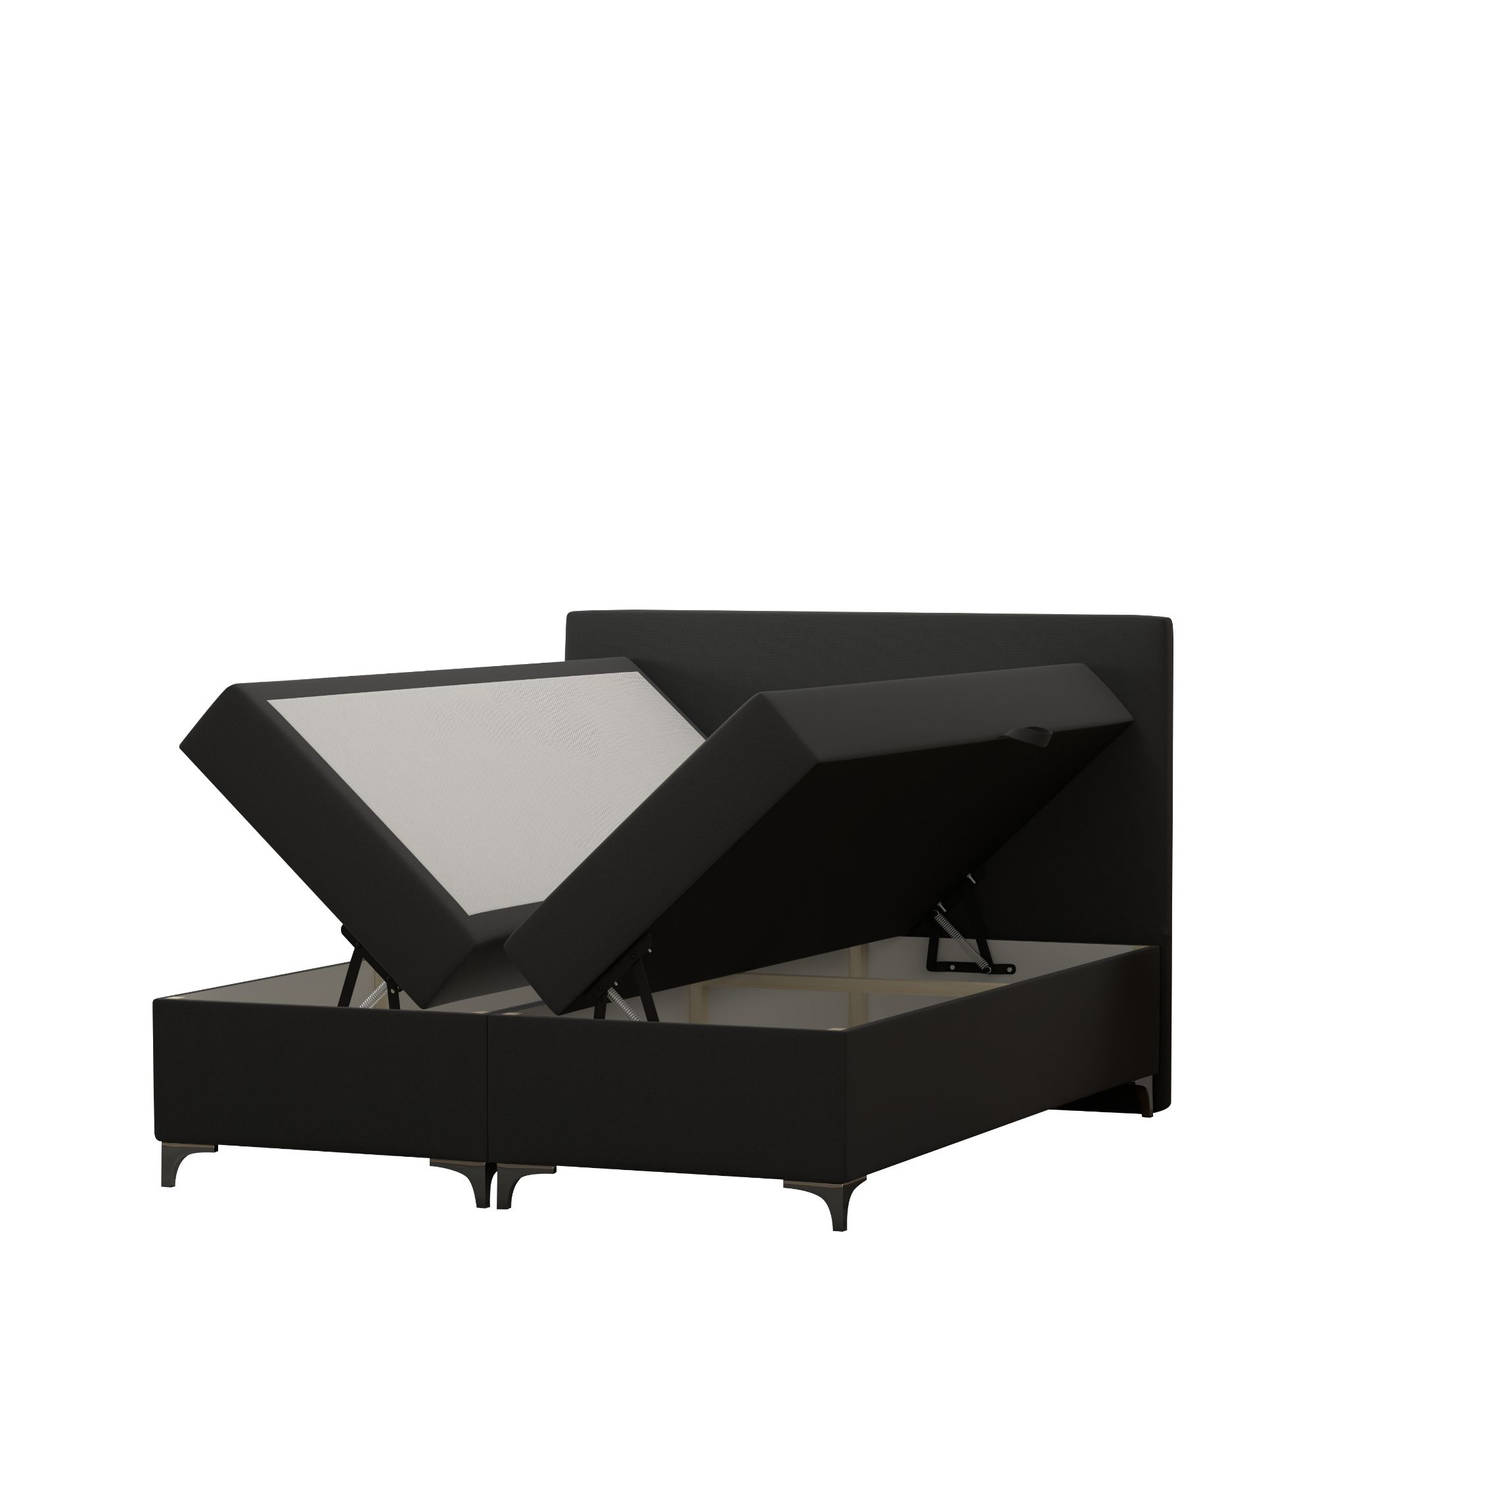 Springcrest® Luxe Boxspringset met Opbergruimte - Bed - 140x200 cm - Antraciet